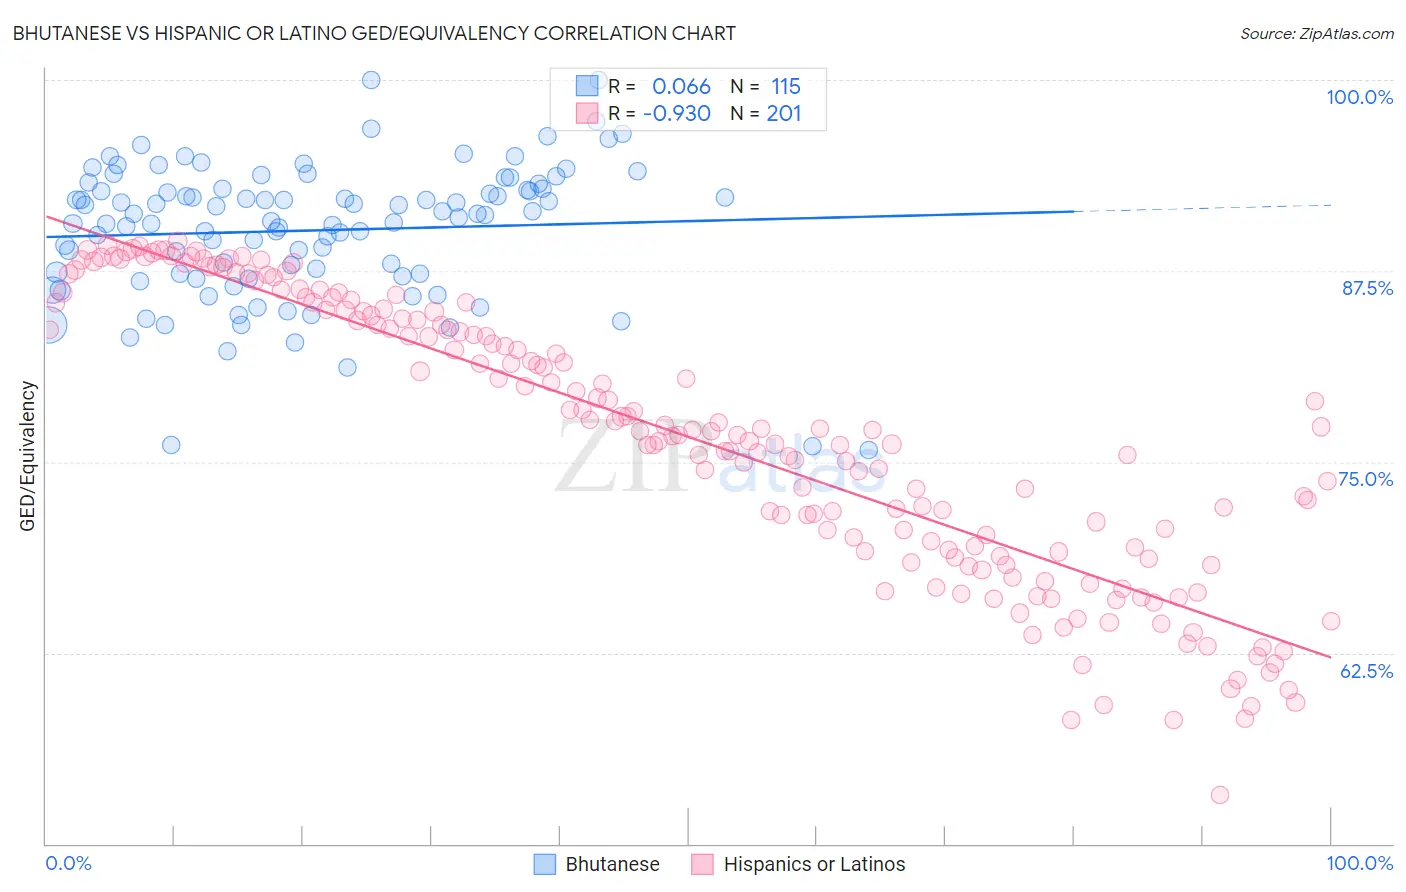 Bhutanese vs Hispanic or Latino GED/Equivalency